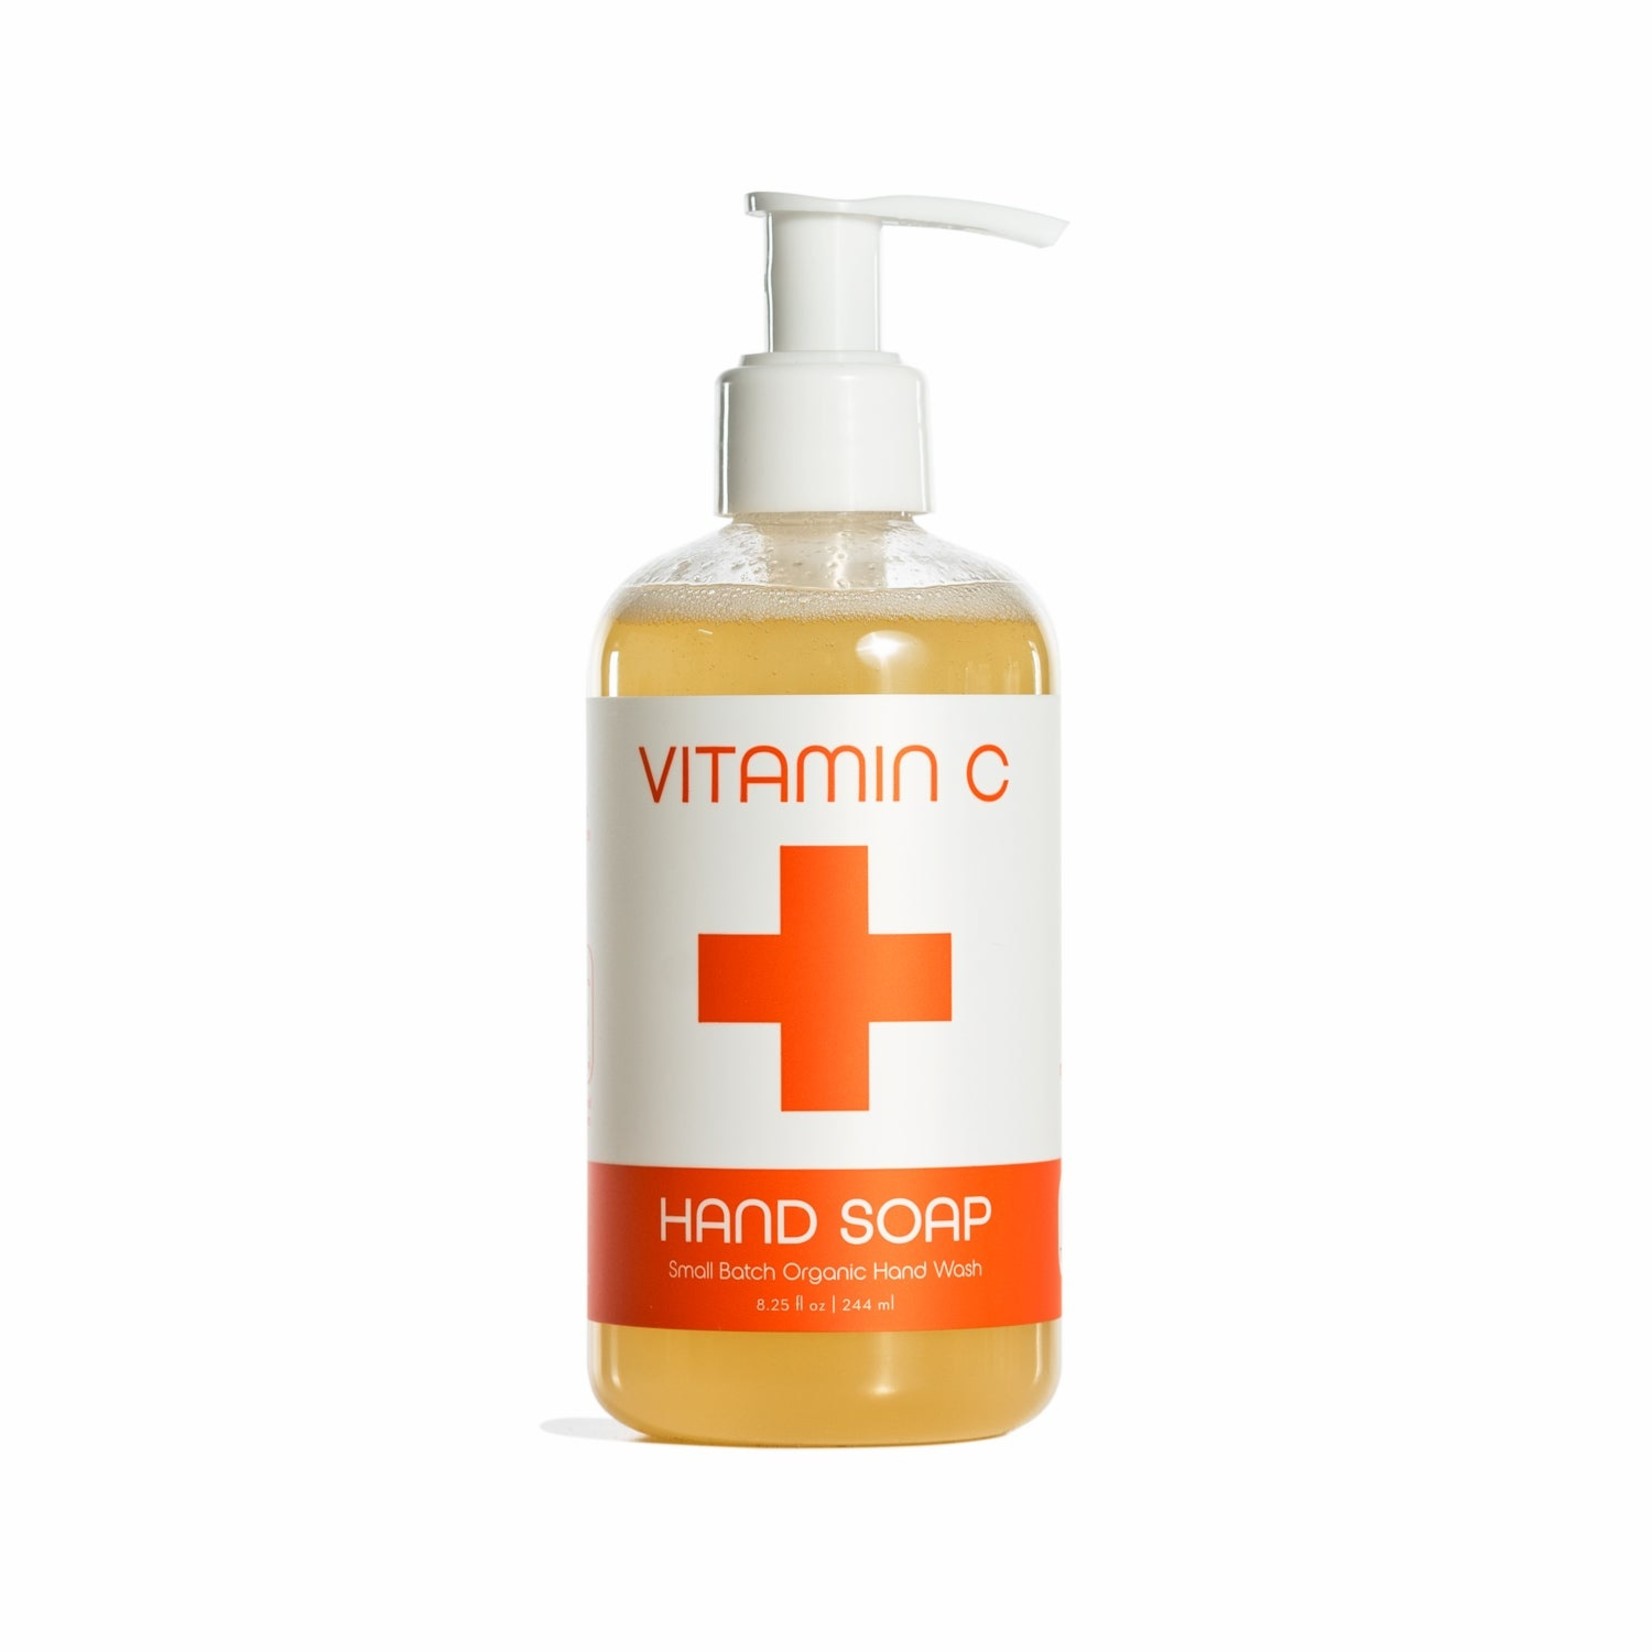 KALASTYLE Nordic+Wellness™ Vitamin C Liquid Hand Soap